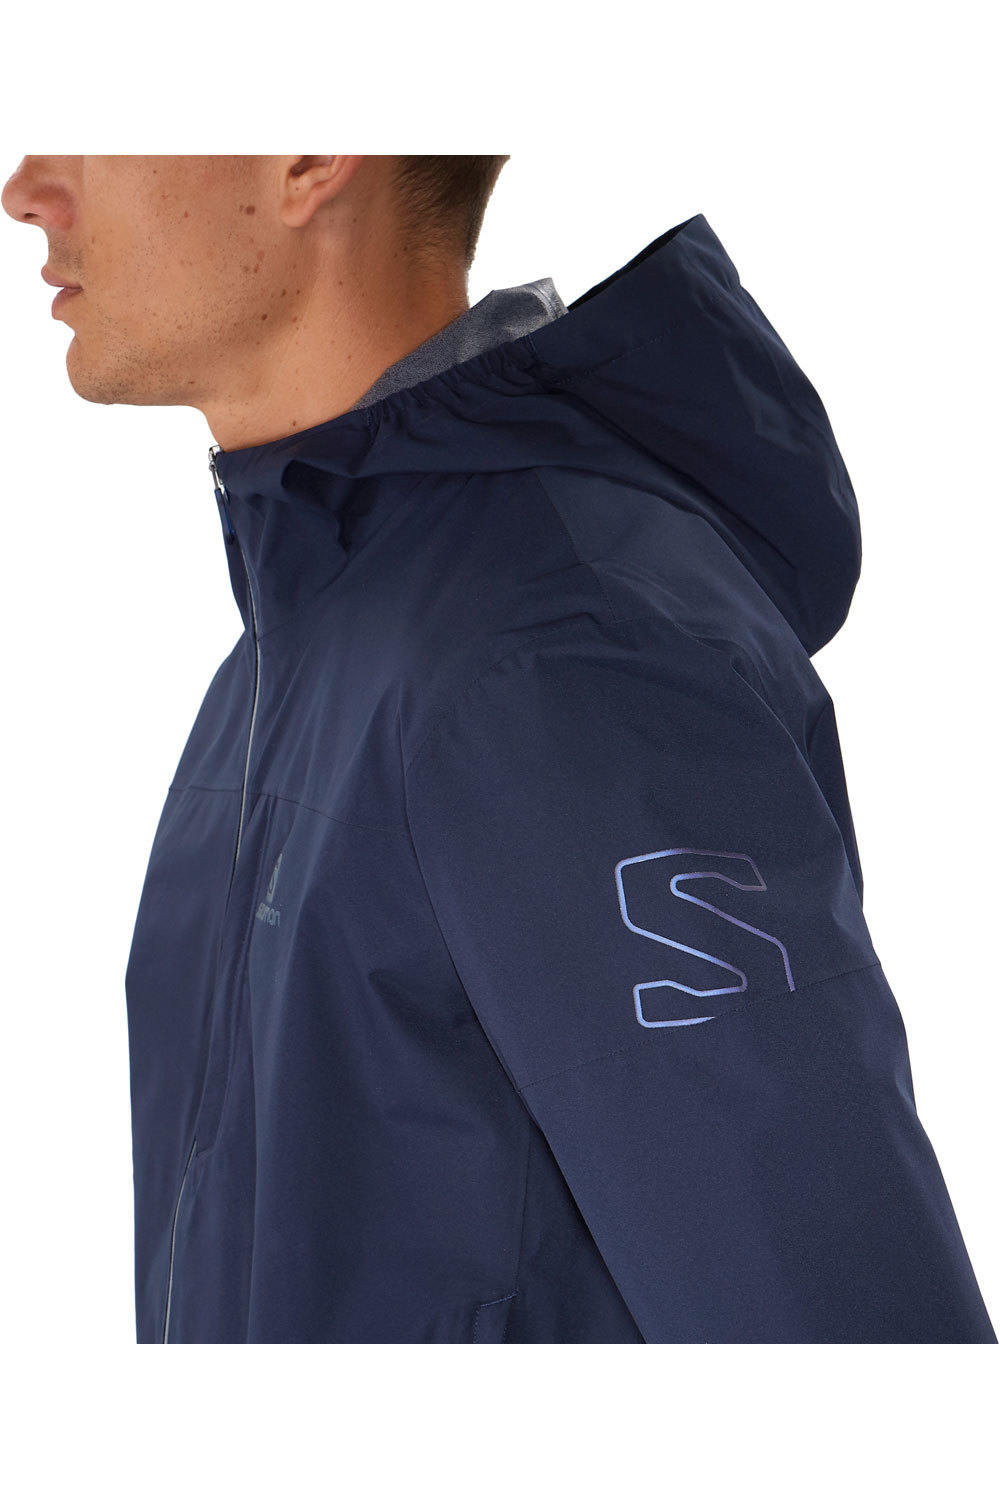 Salomon chaqueta impermeable hombre XA 2.5L WATERPROOF JACKET-NIGHT SKY-- 04